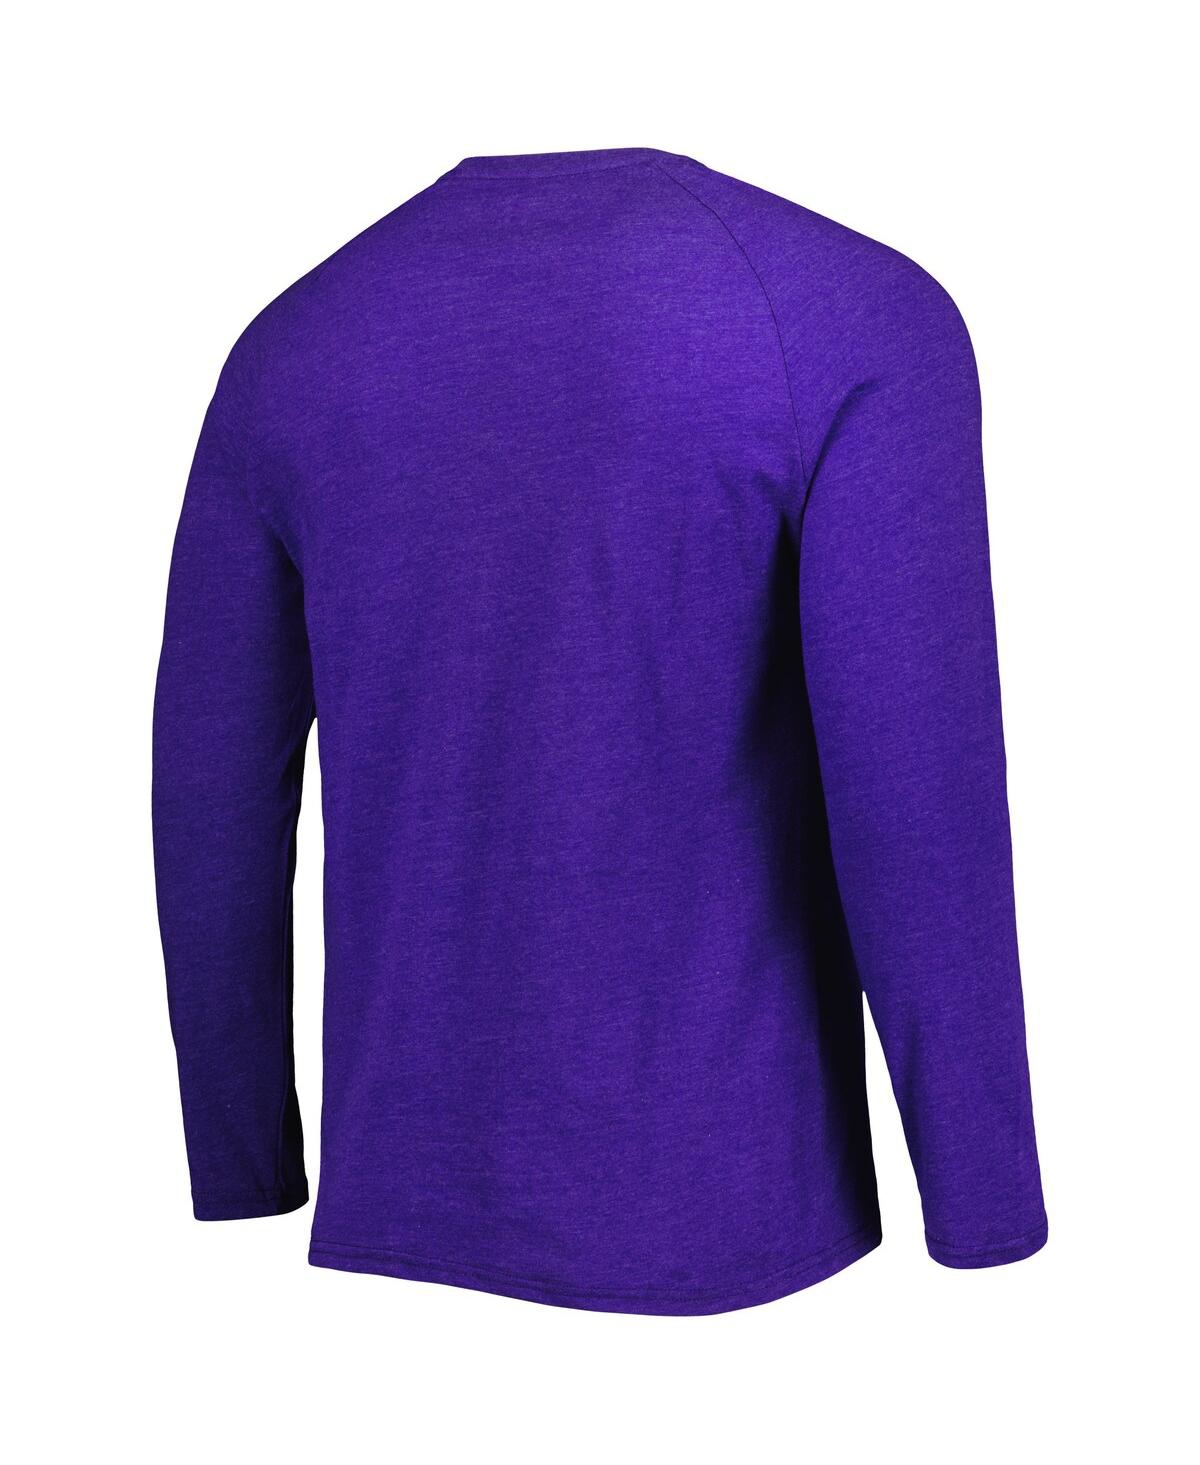 Shop Concepts Sport Men's  Heathered Purple Phoenix Suns Left Chest Henley Raglan Long Sleeve T-shirt